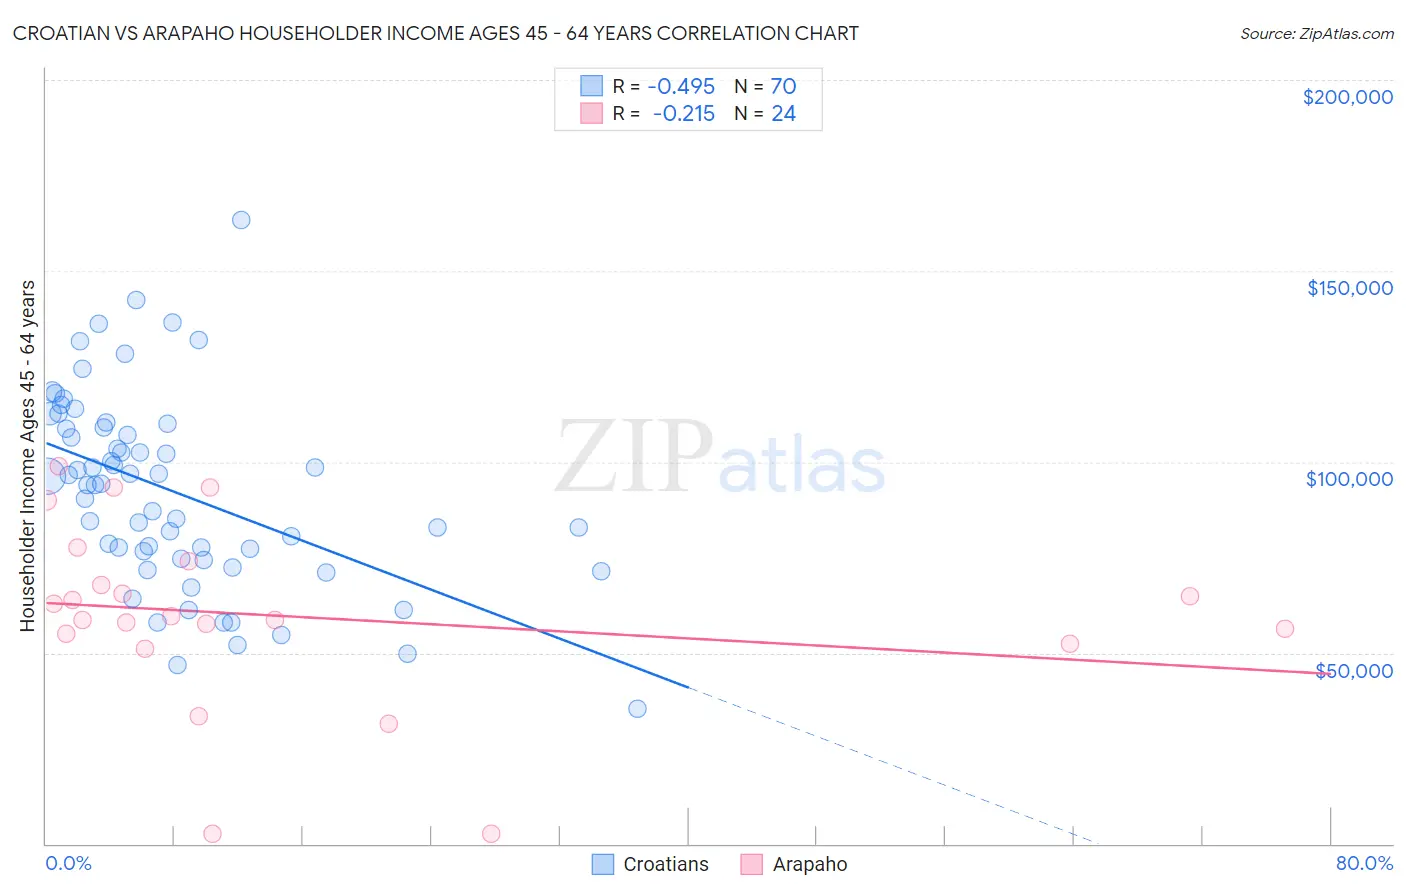 Croatian vs Arapaho Householder Income Ages 45 - 64 years